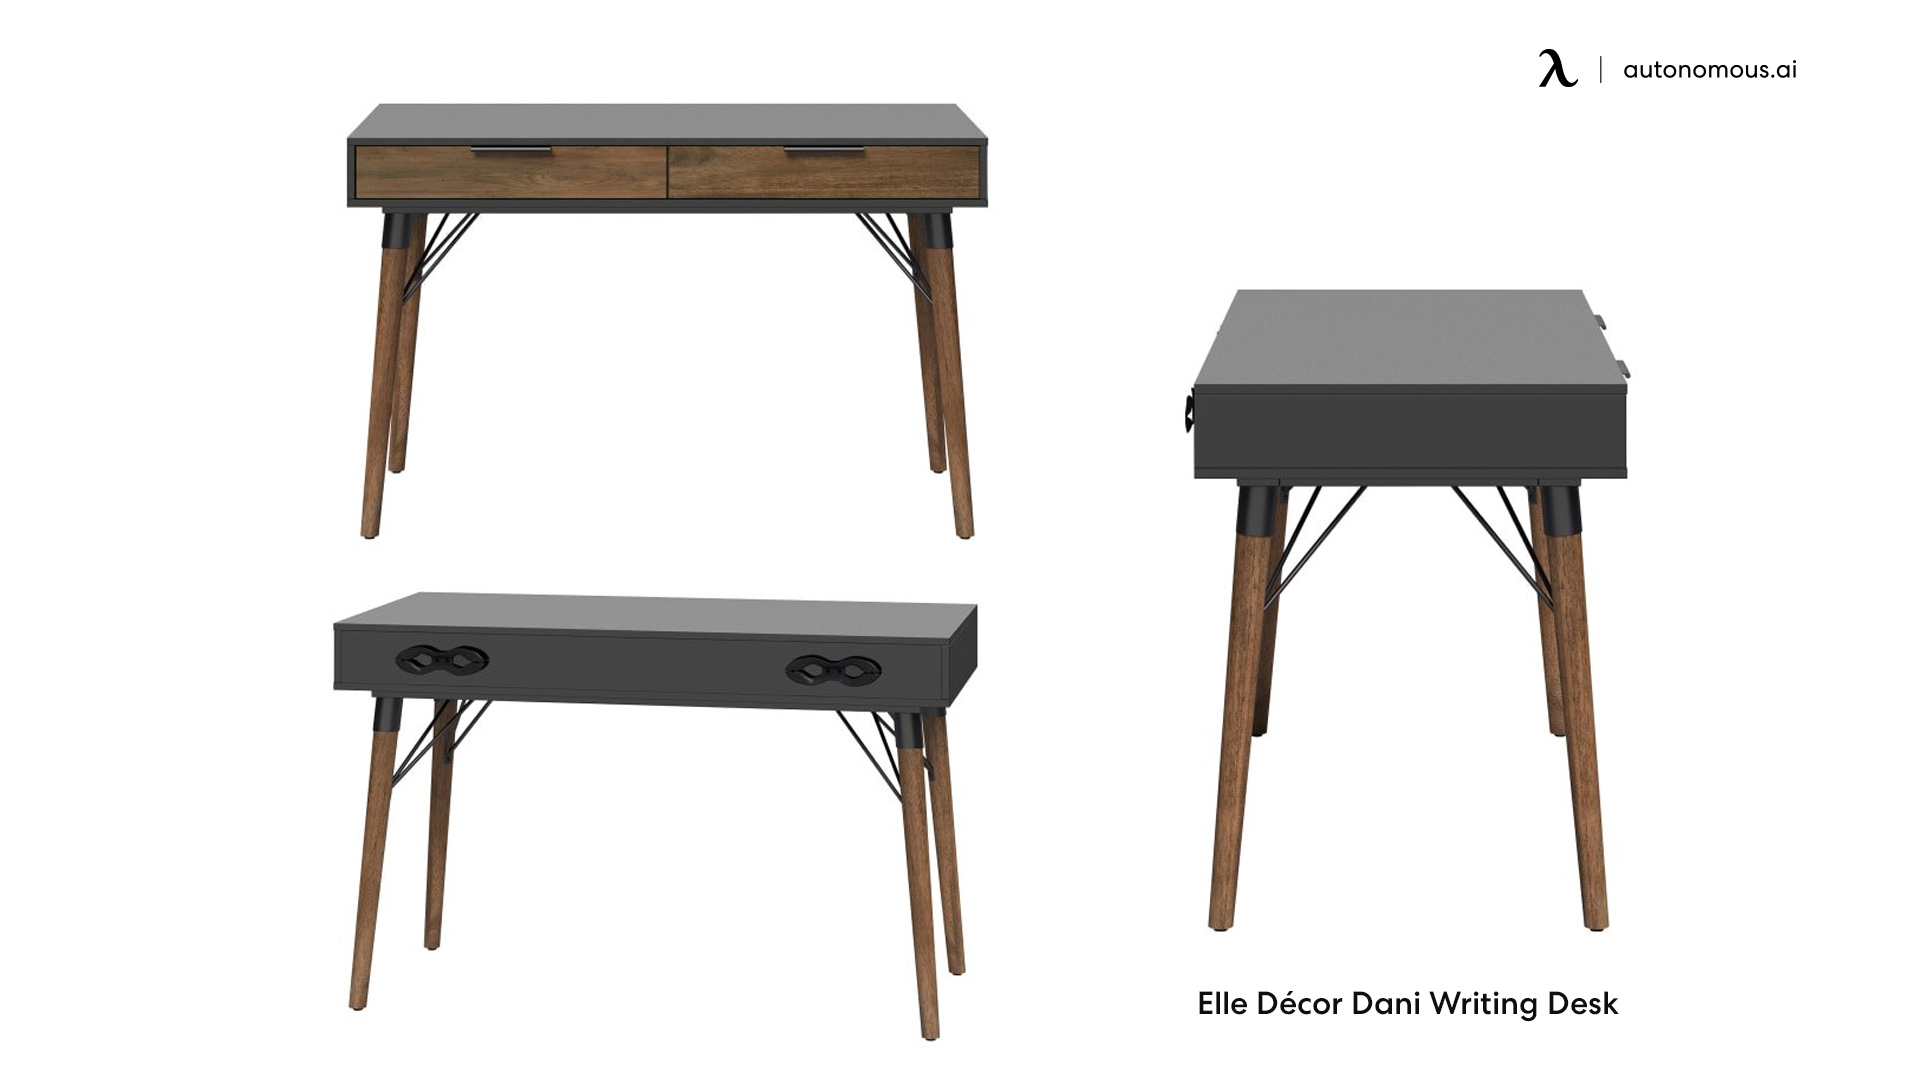 Elle Décor modern wood desk